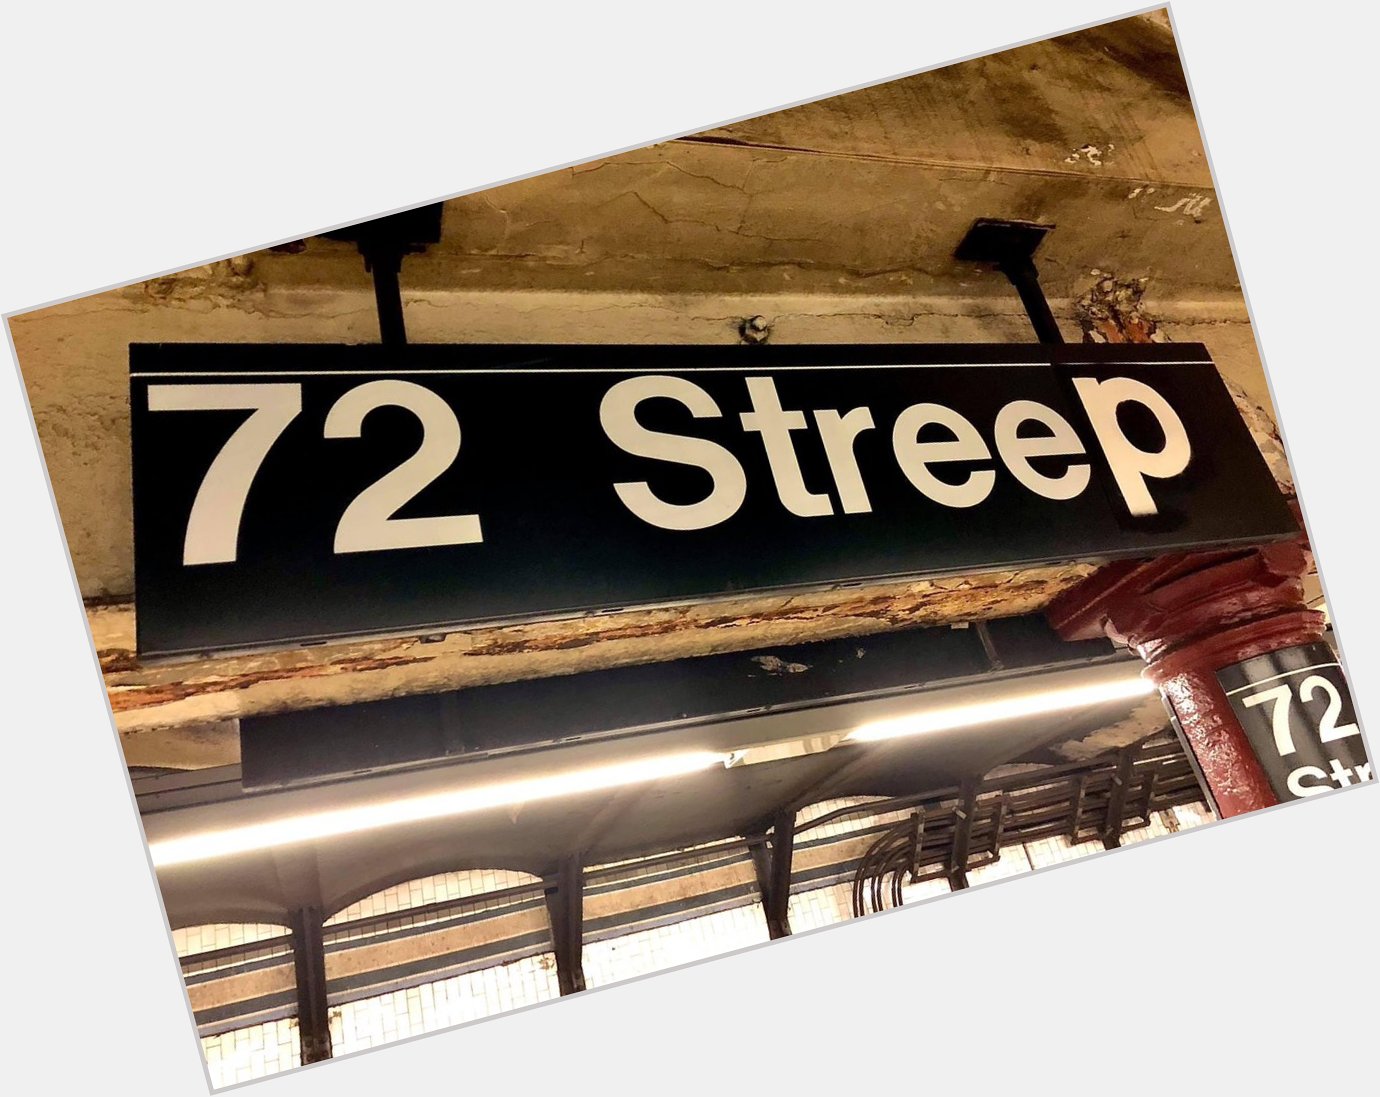  Happy 72 birthday Meryl Streep! We here in NYC are celebrating you on 72 Streep!!! 